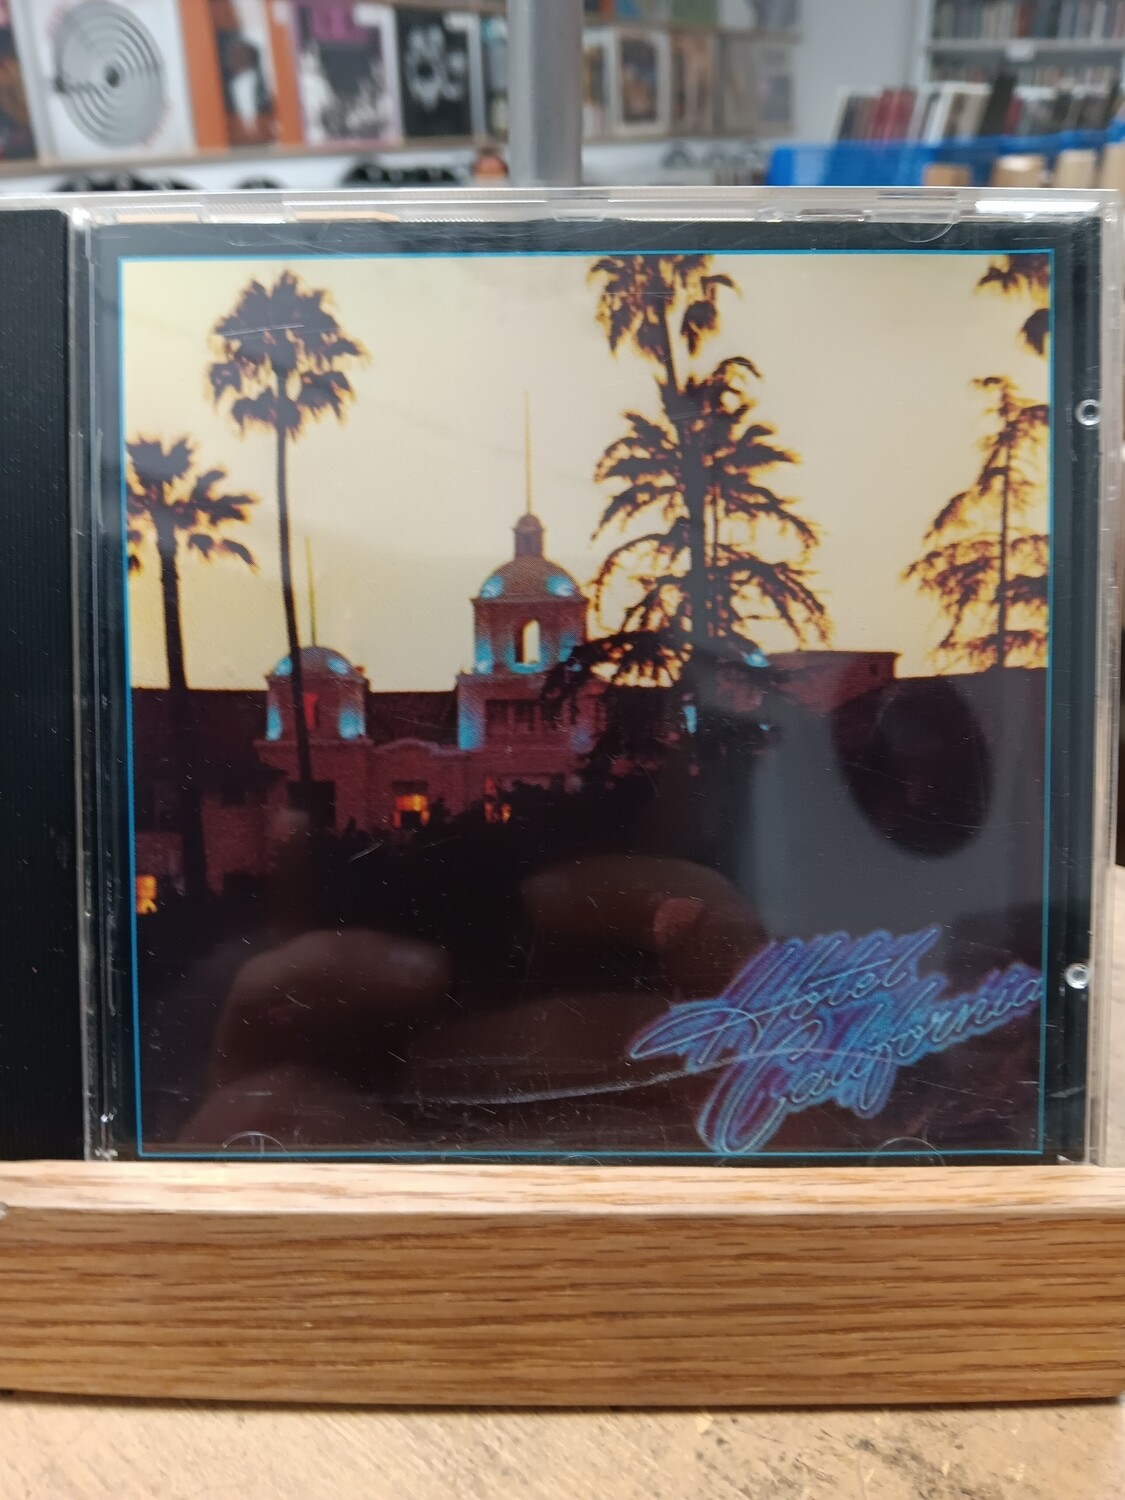 EAGLES - Hotel California (CD)